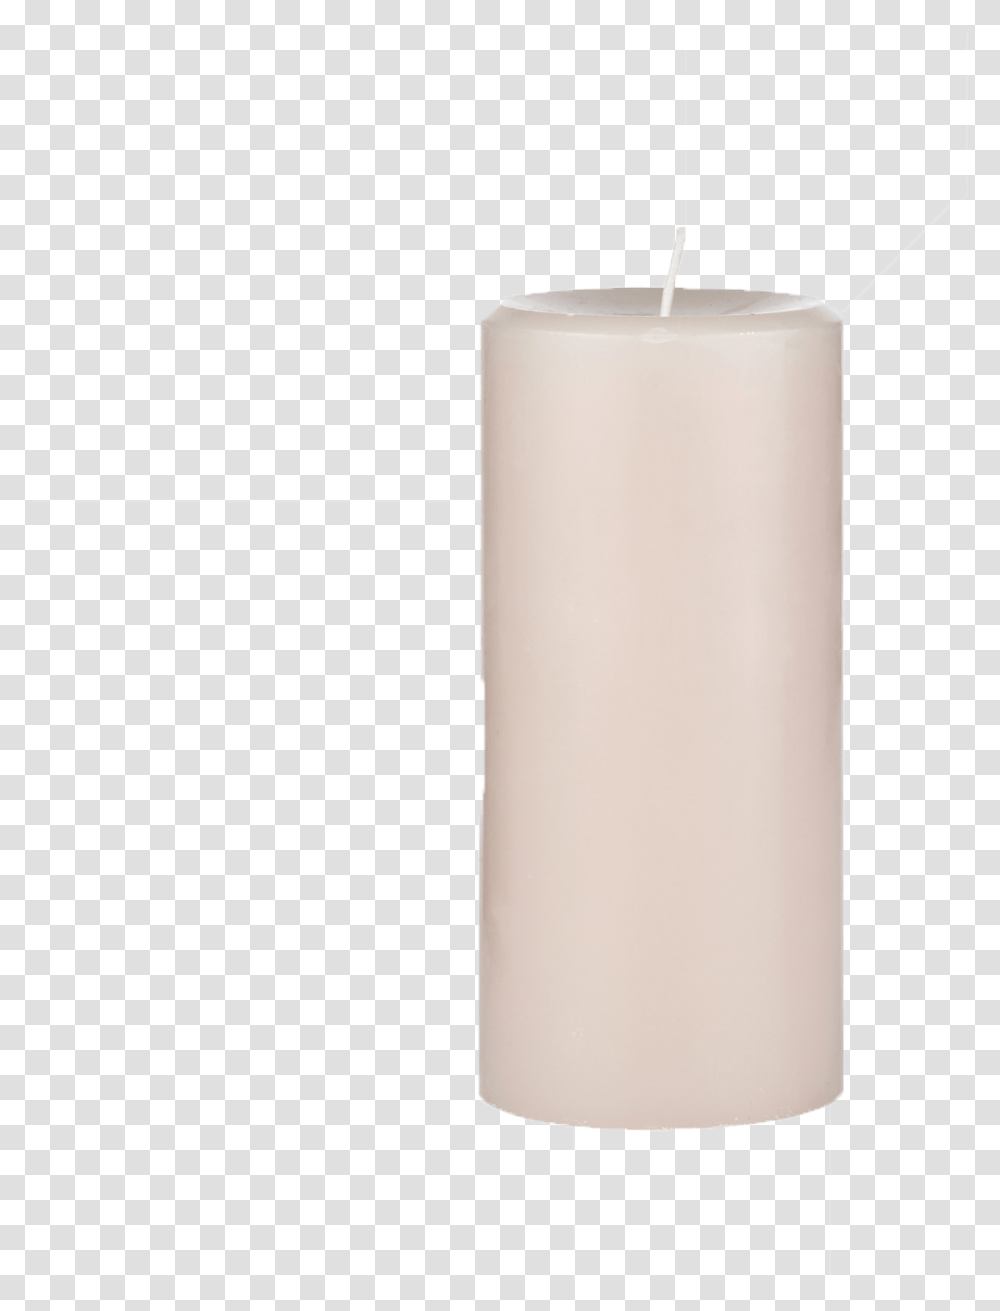 Candles Hd Images Unity Candle, Lamp, Cylinder, Milk, Beverage Transparent Png